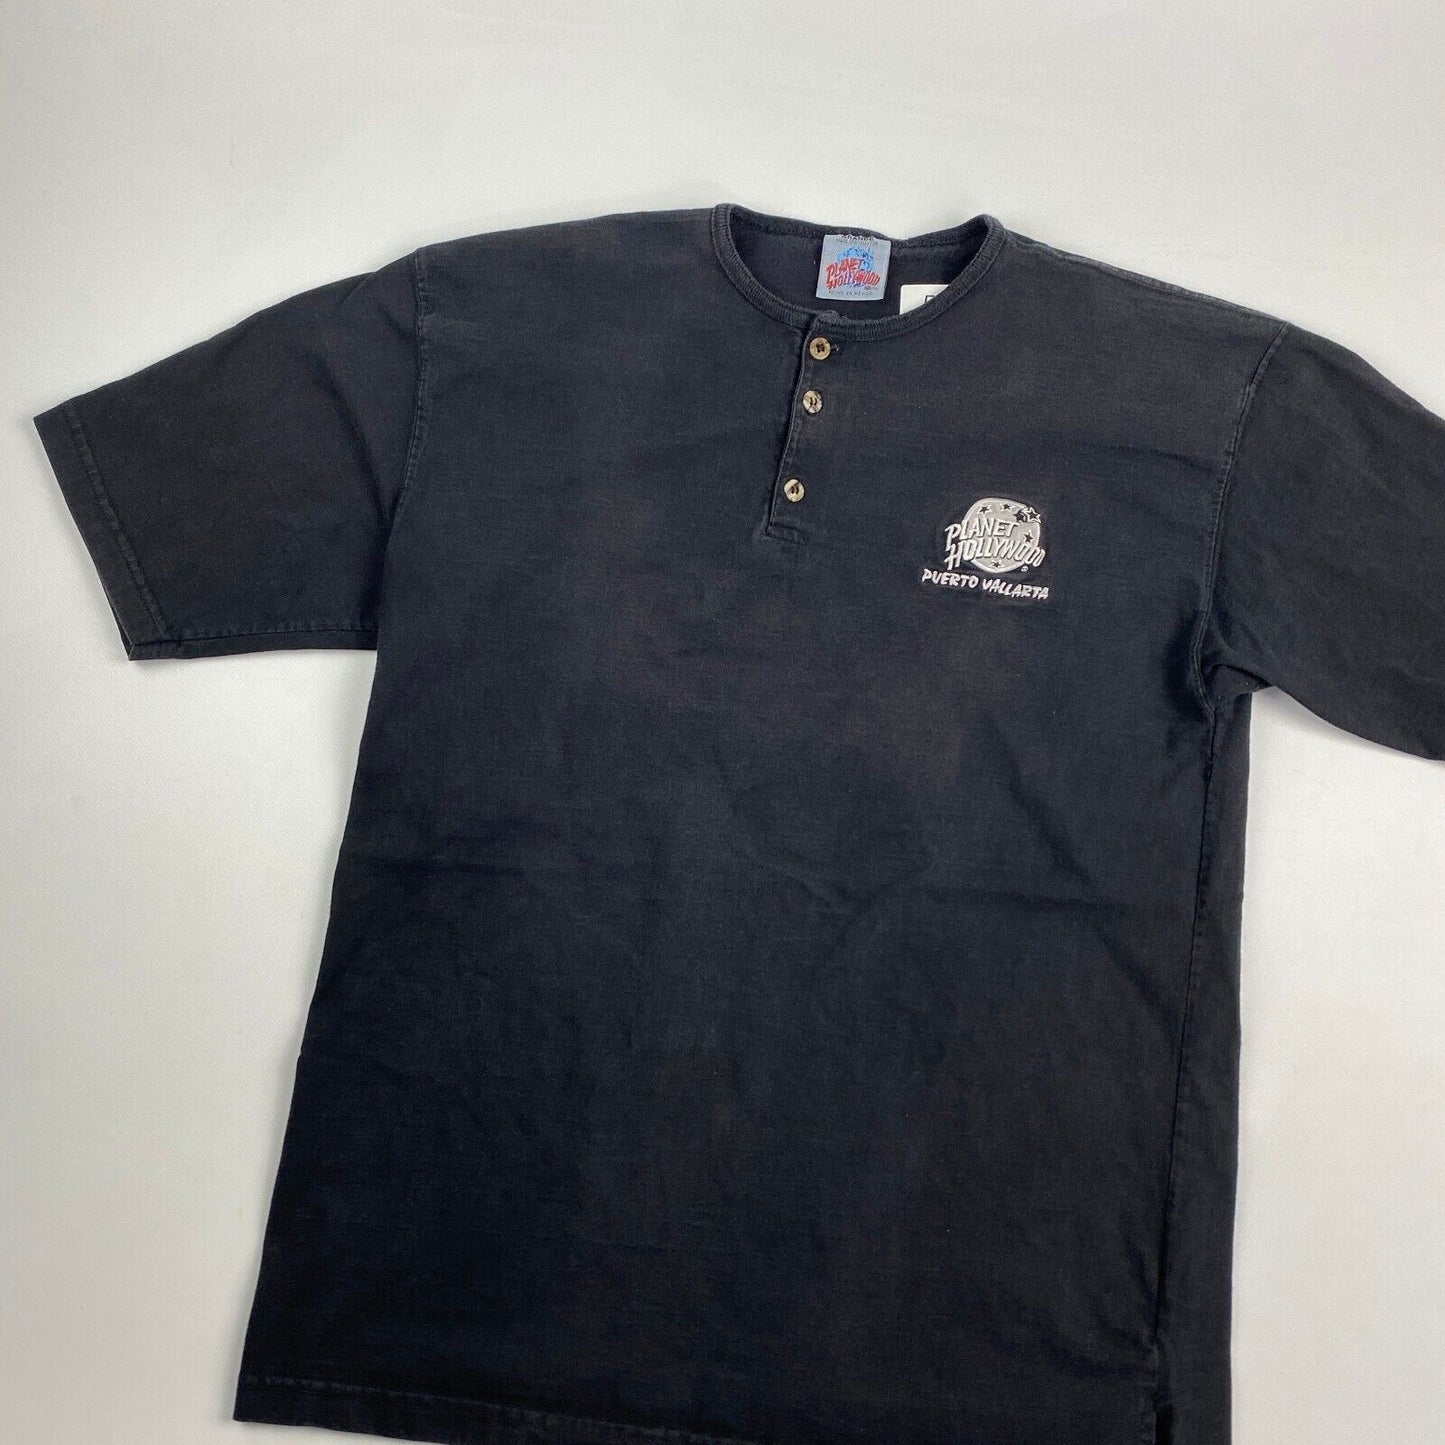 VINTAGE Planet Hollywood Embroidered Black Henley T-Shirt sz Medium Men